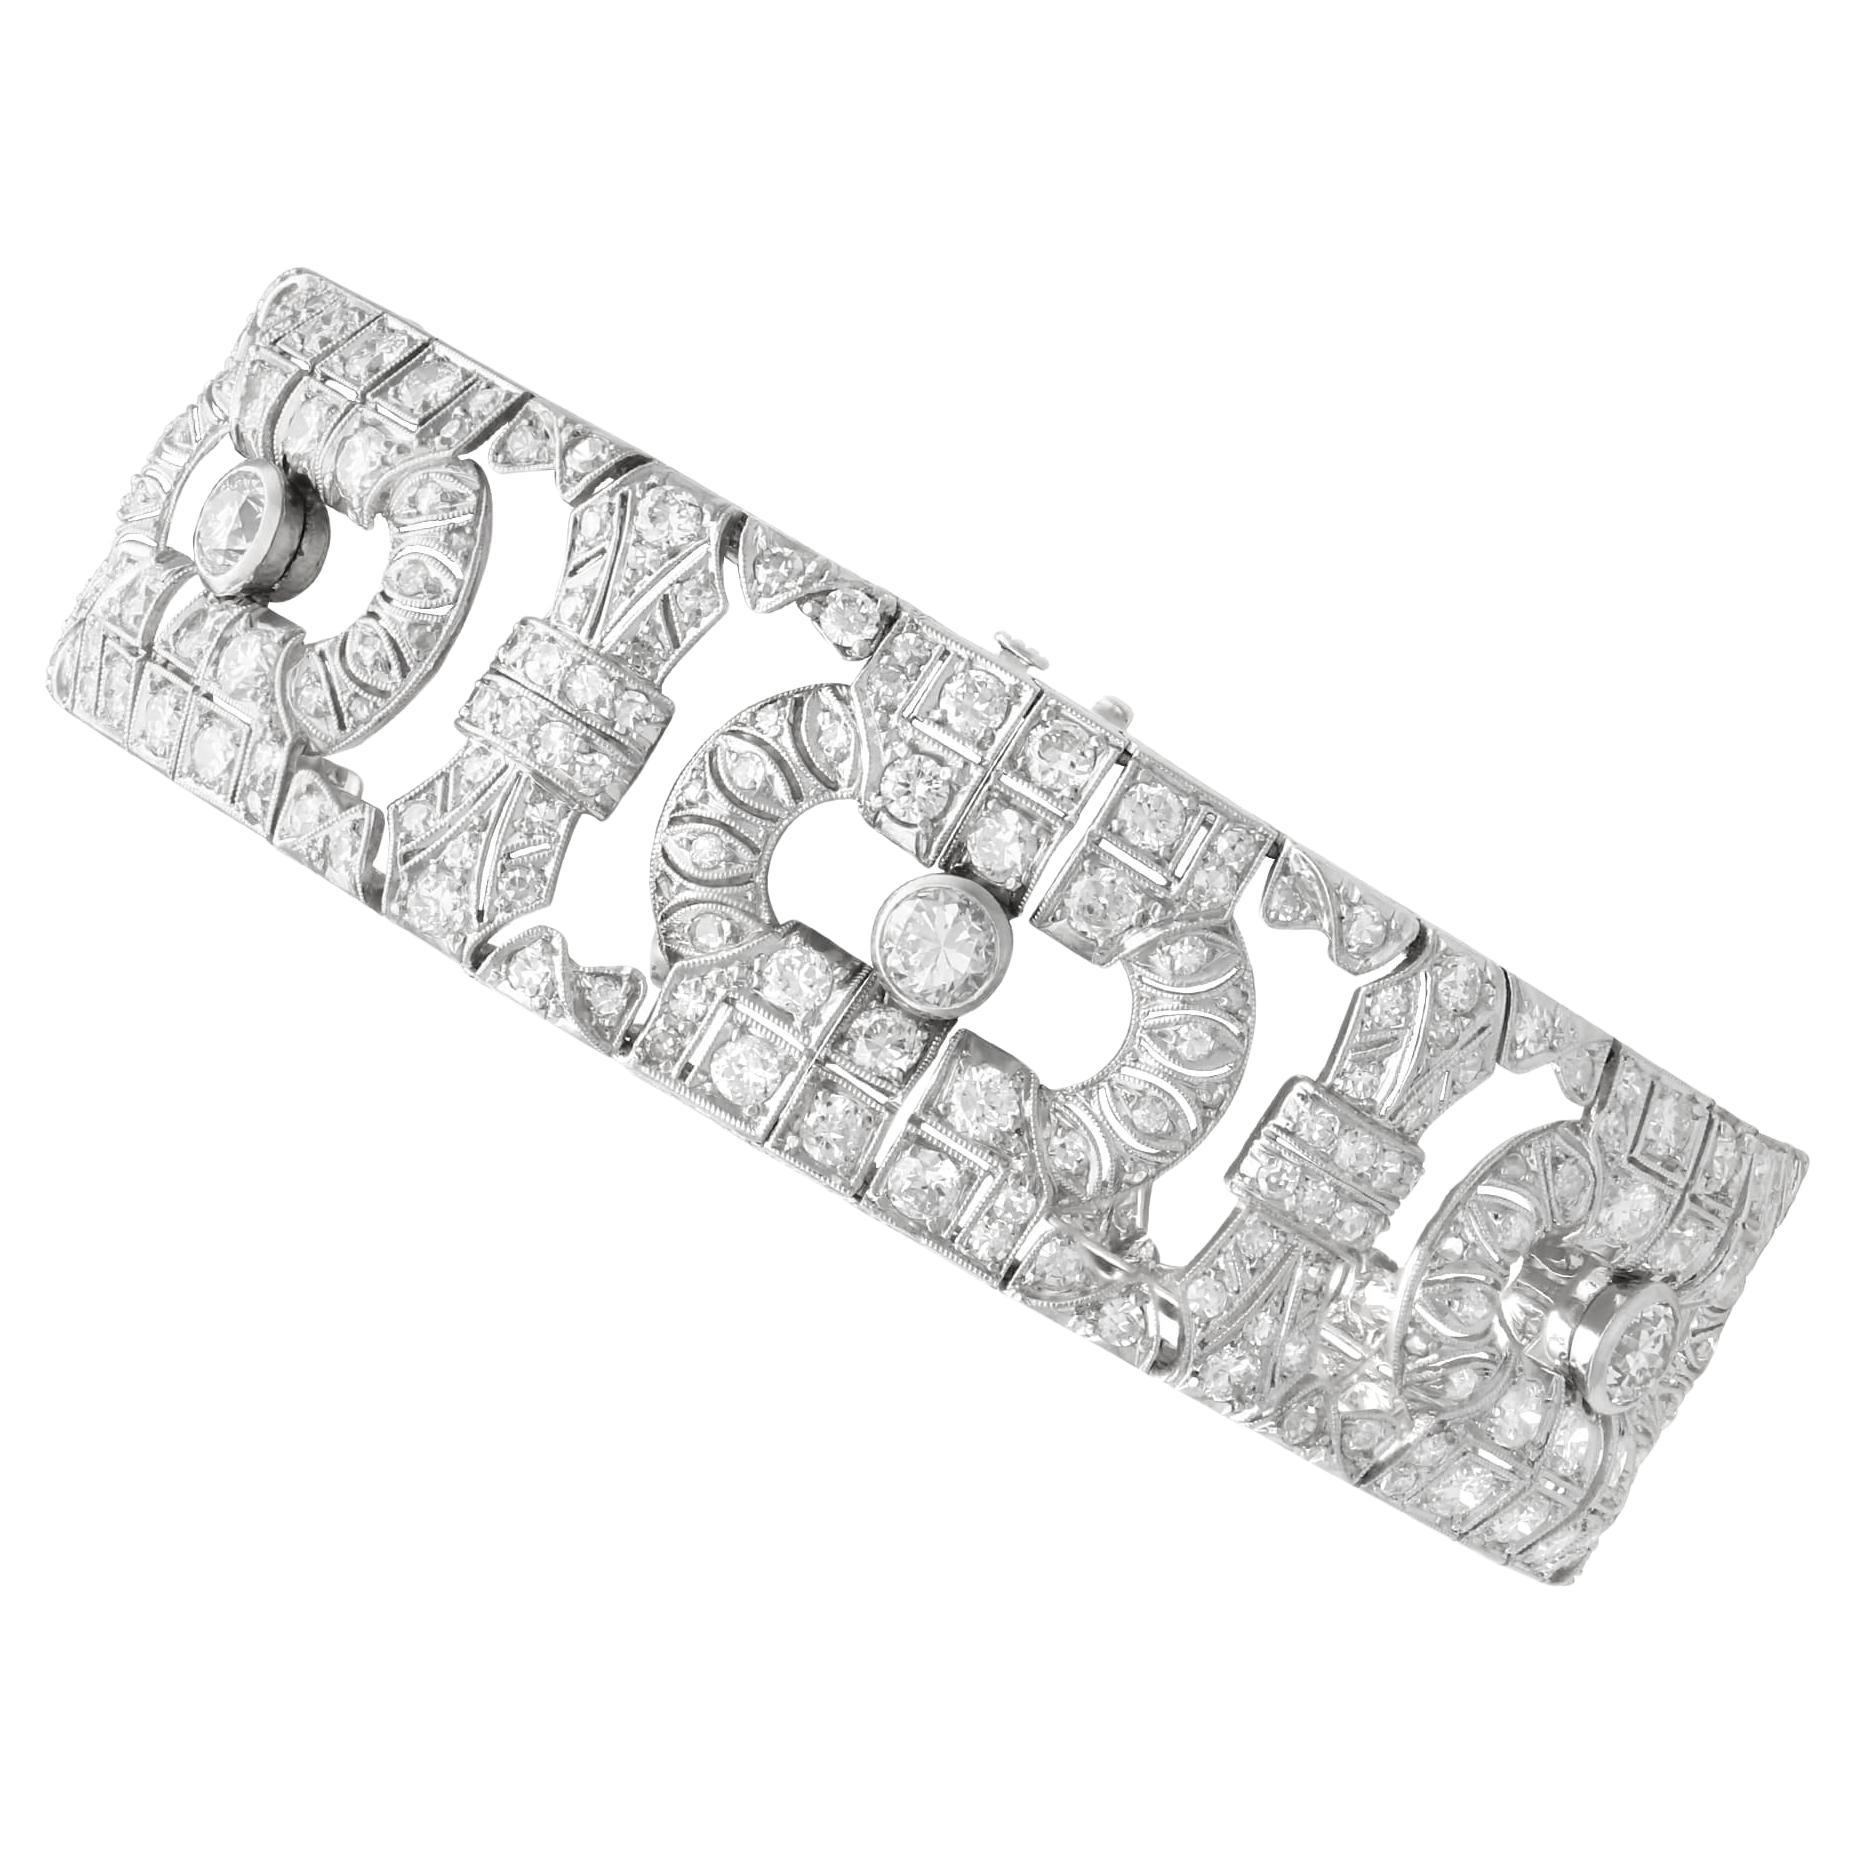 1920s Art Deco 11.32 Carat Diamond and Platinum Bracelet For Sale